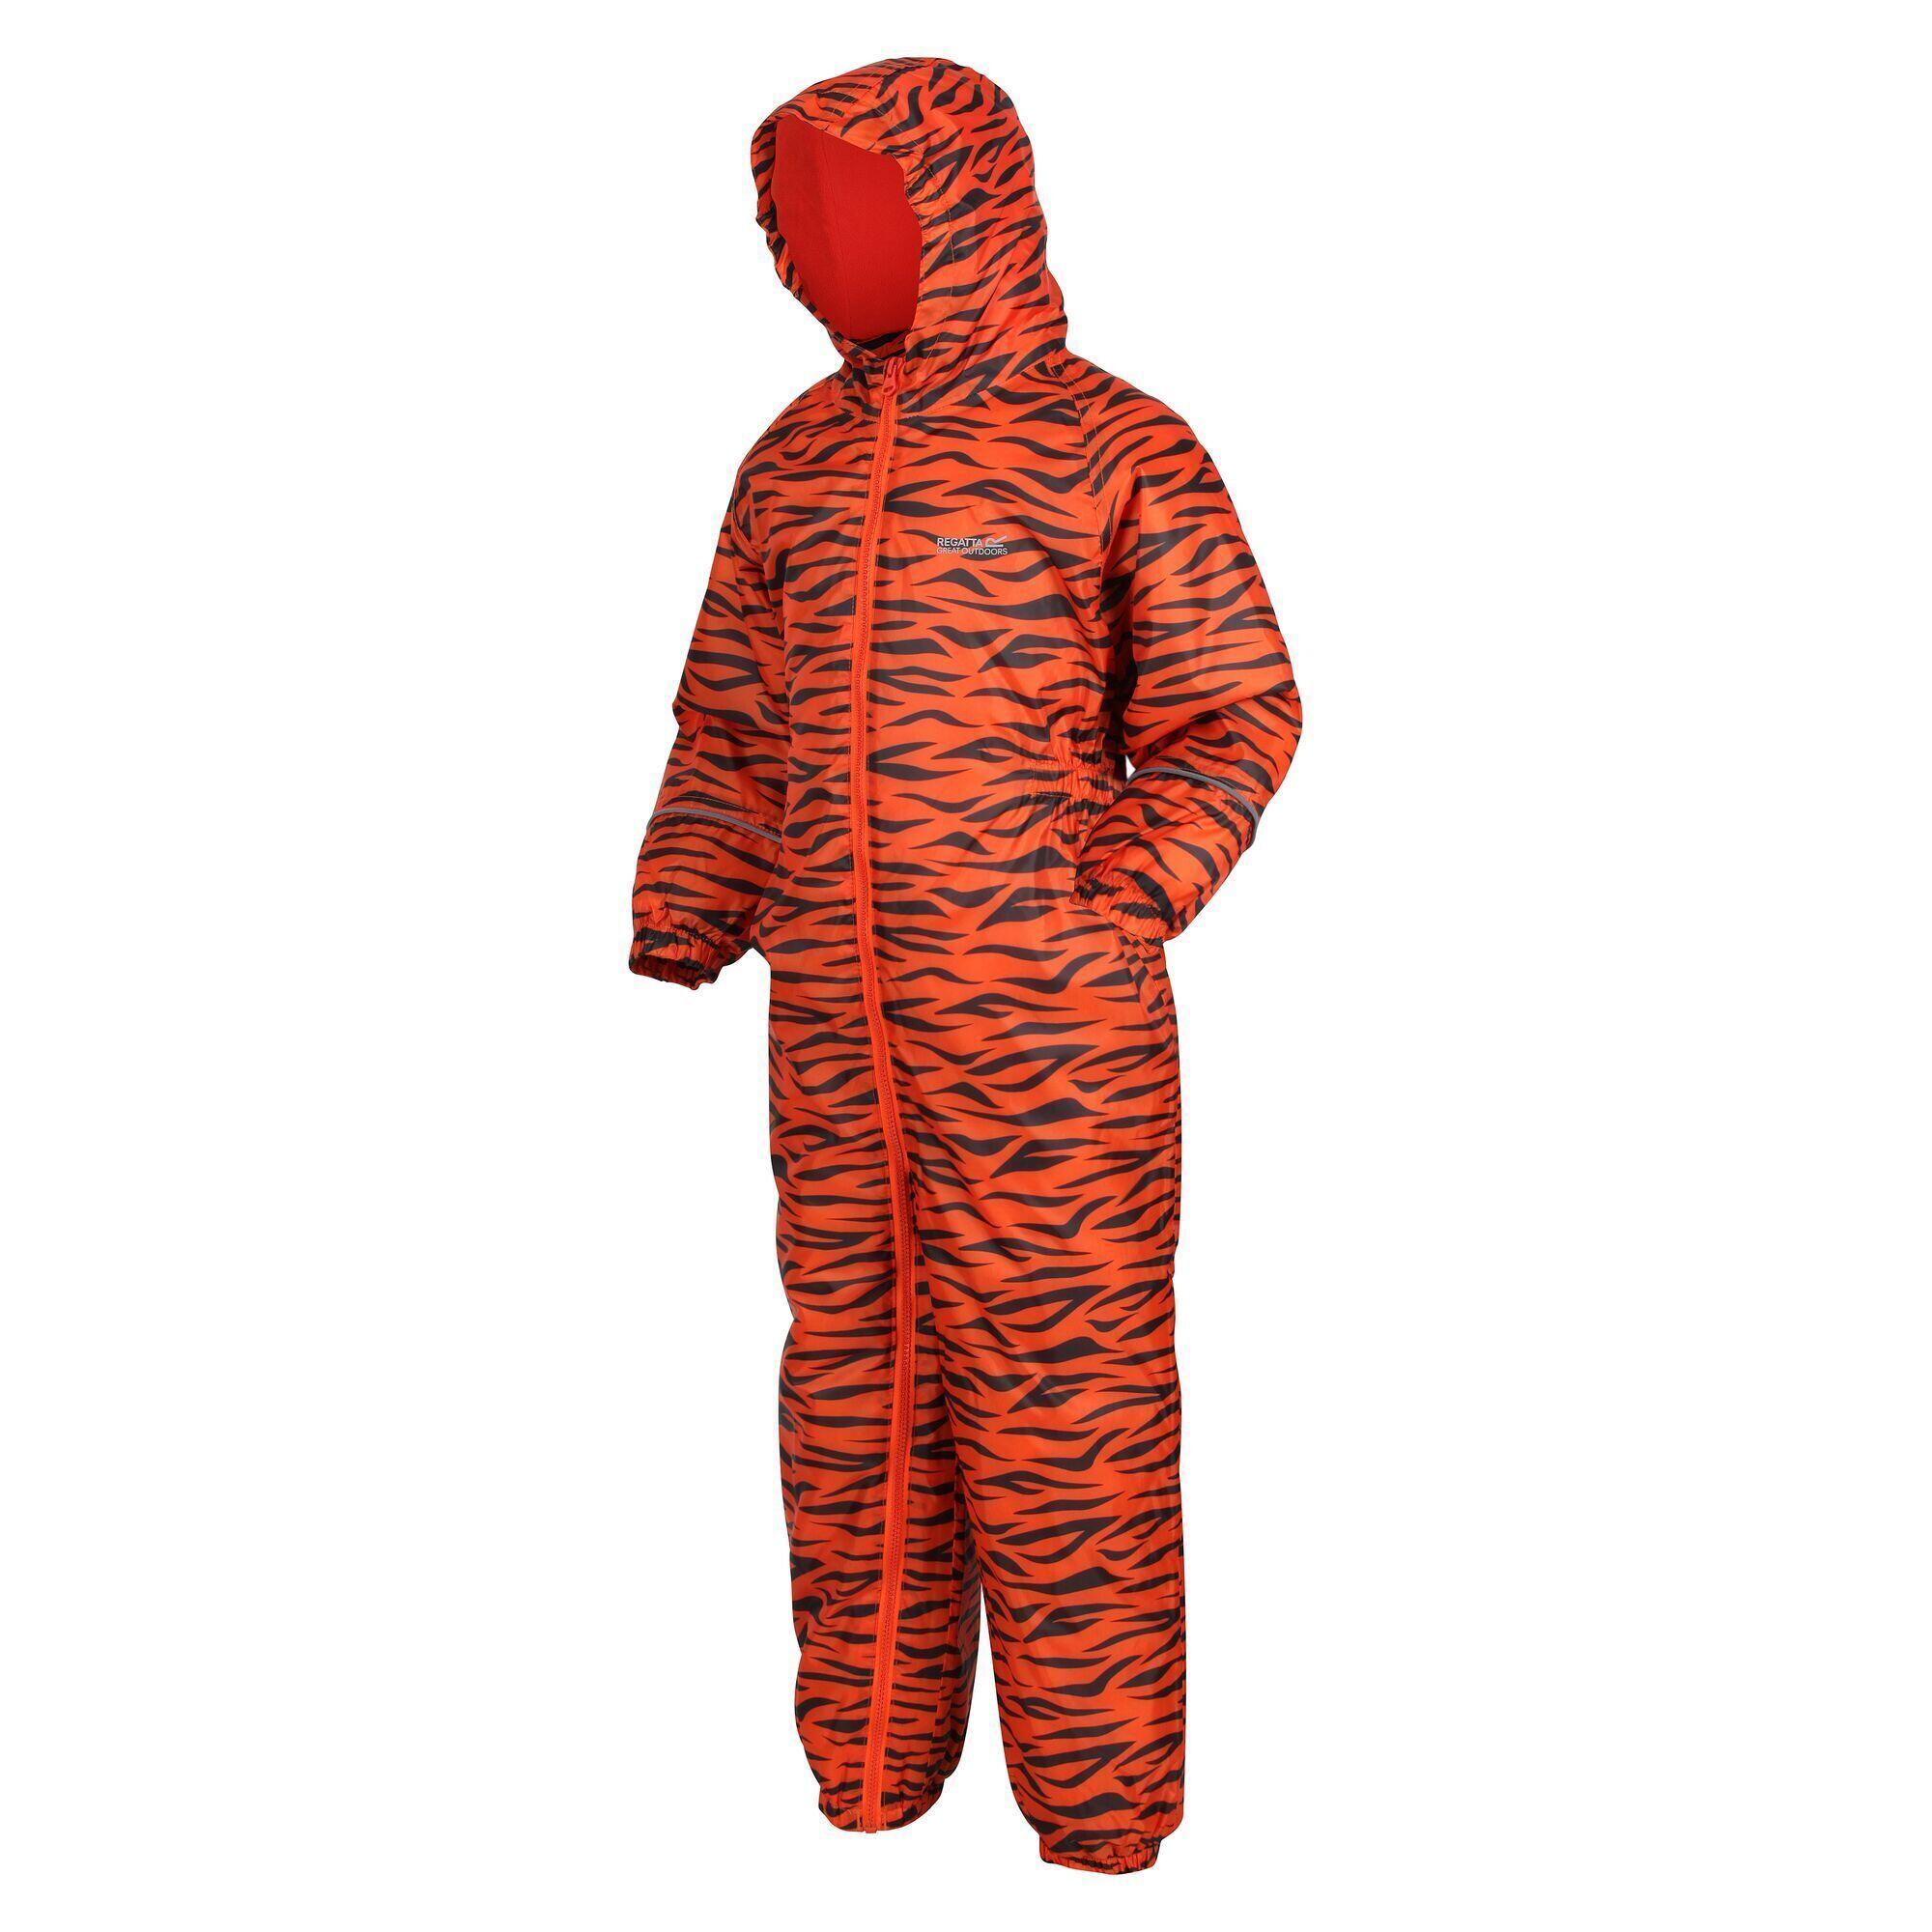 Childrens/Kids Printed Splat II Hooded Rainsuit (Blaze Orange) 4/5